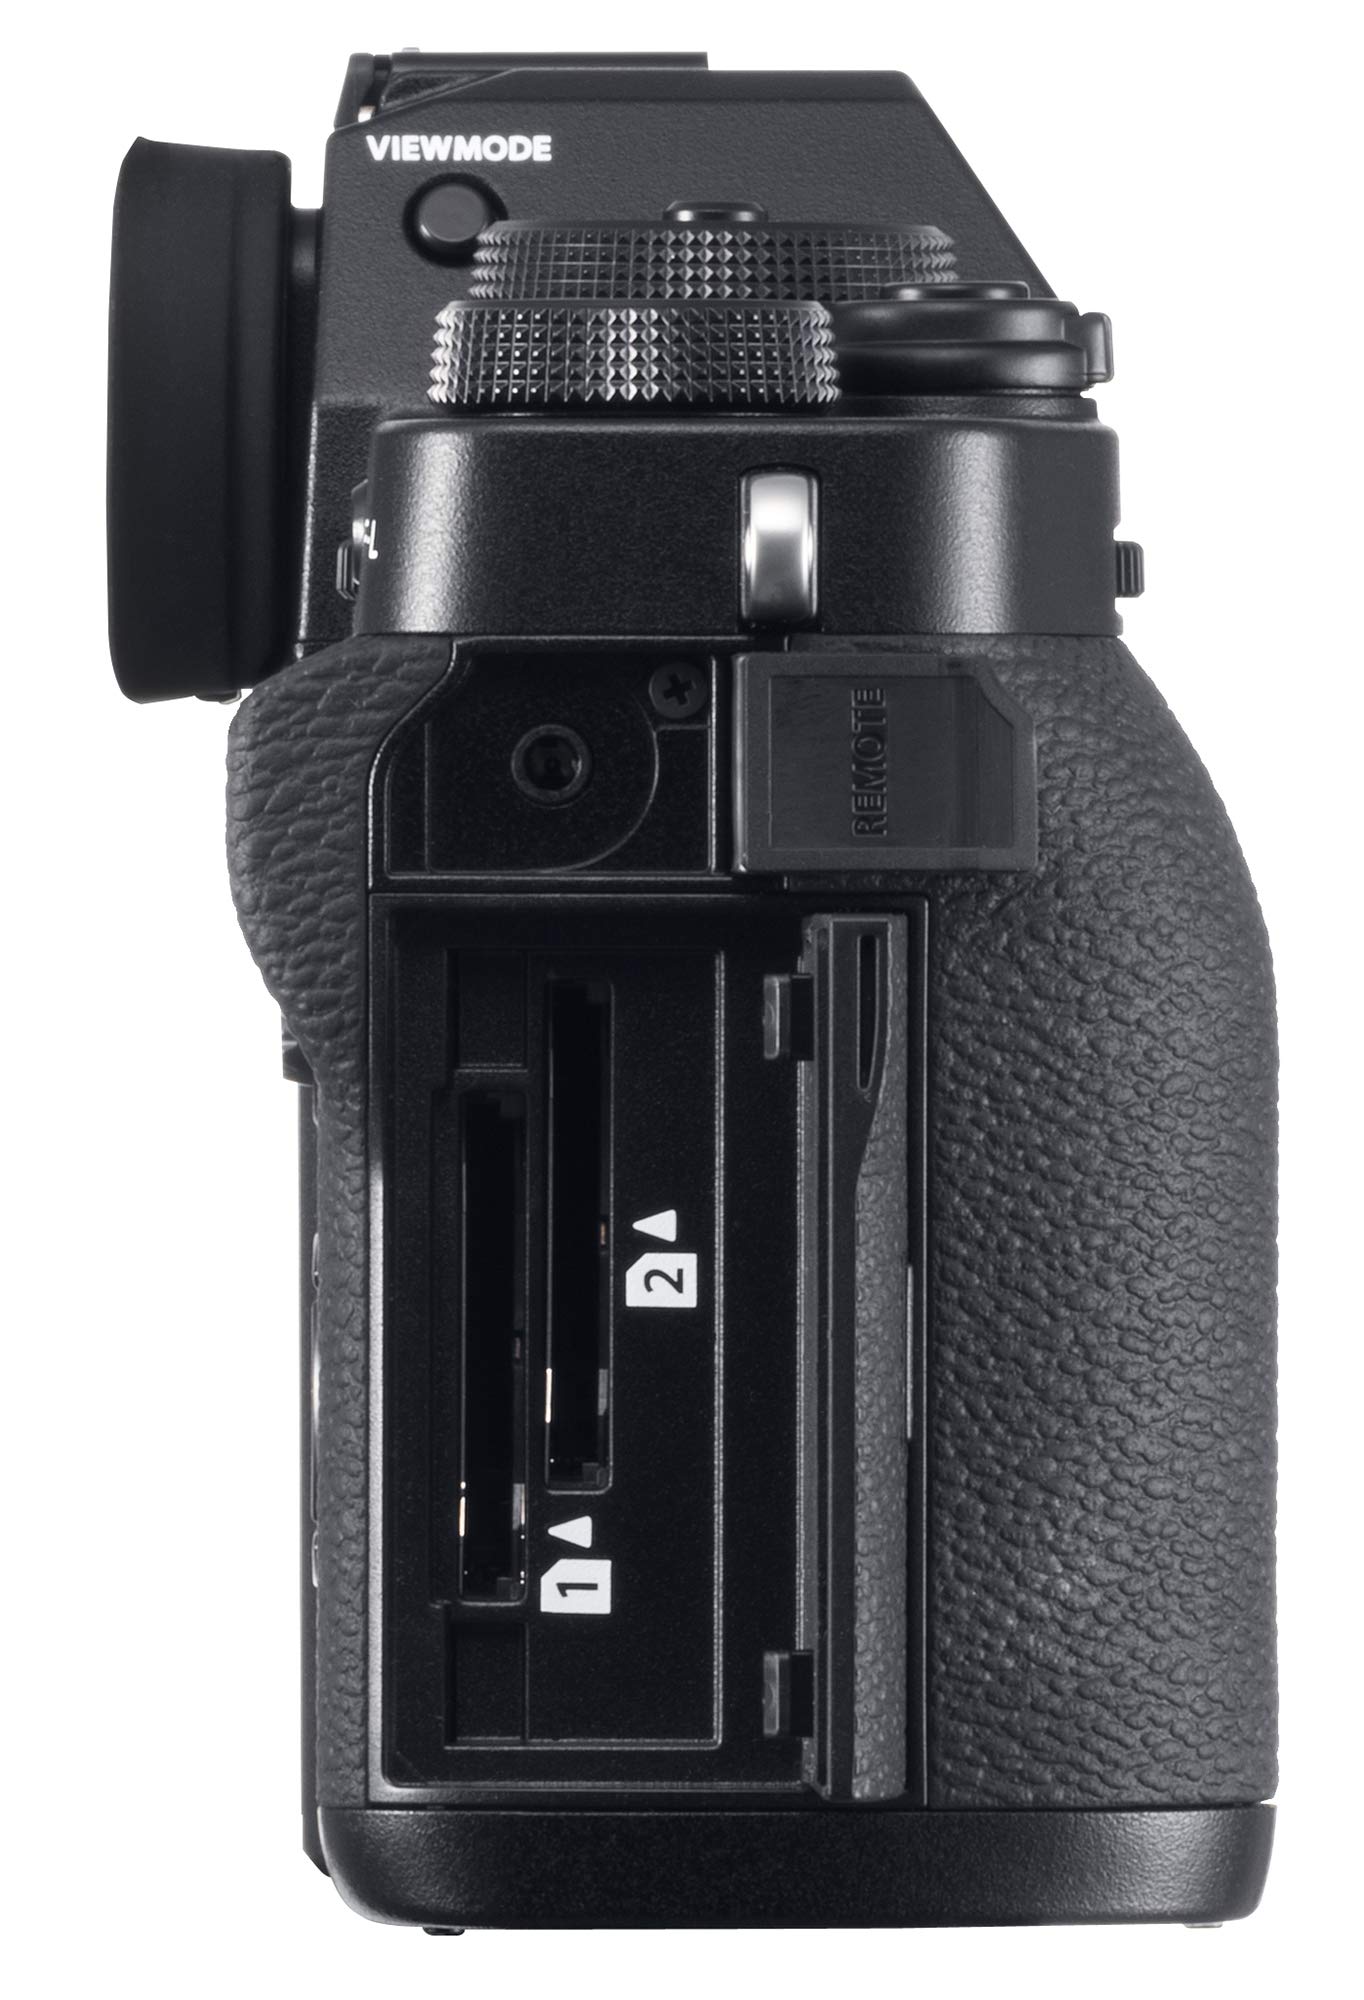 Fujifilm X-T3 Mirrorless Digital Camera (Body Only) - Black